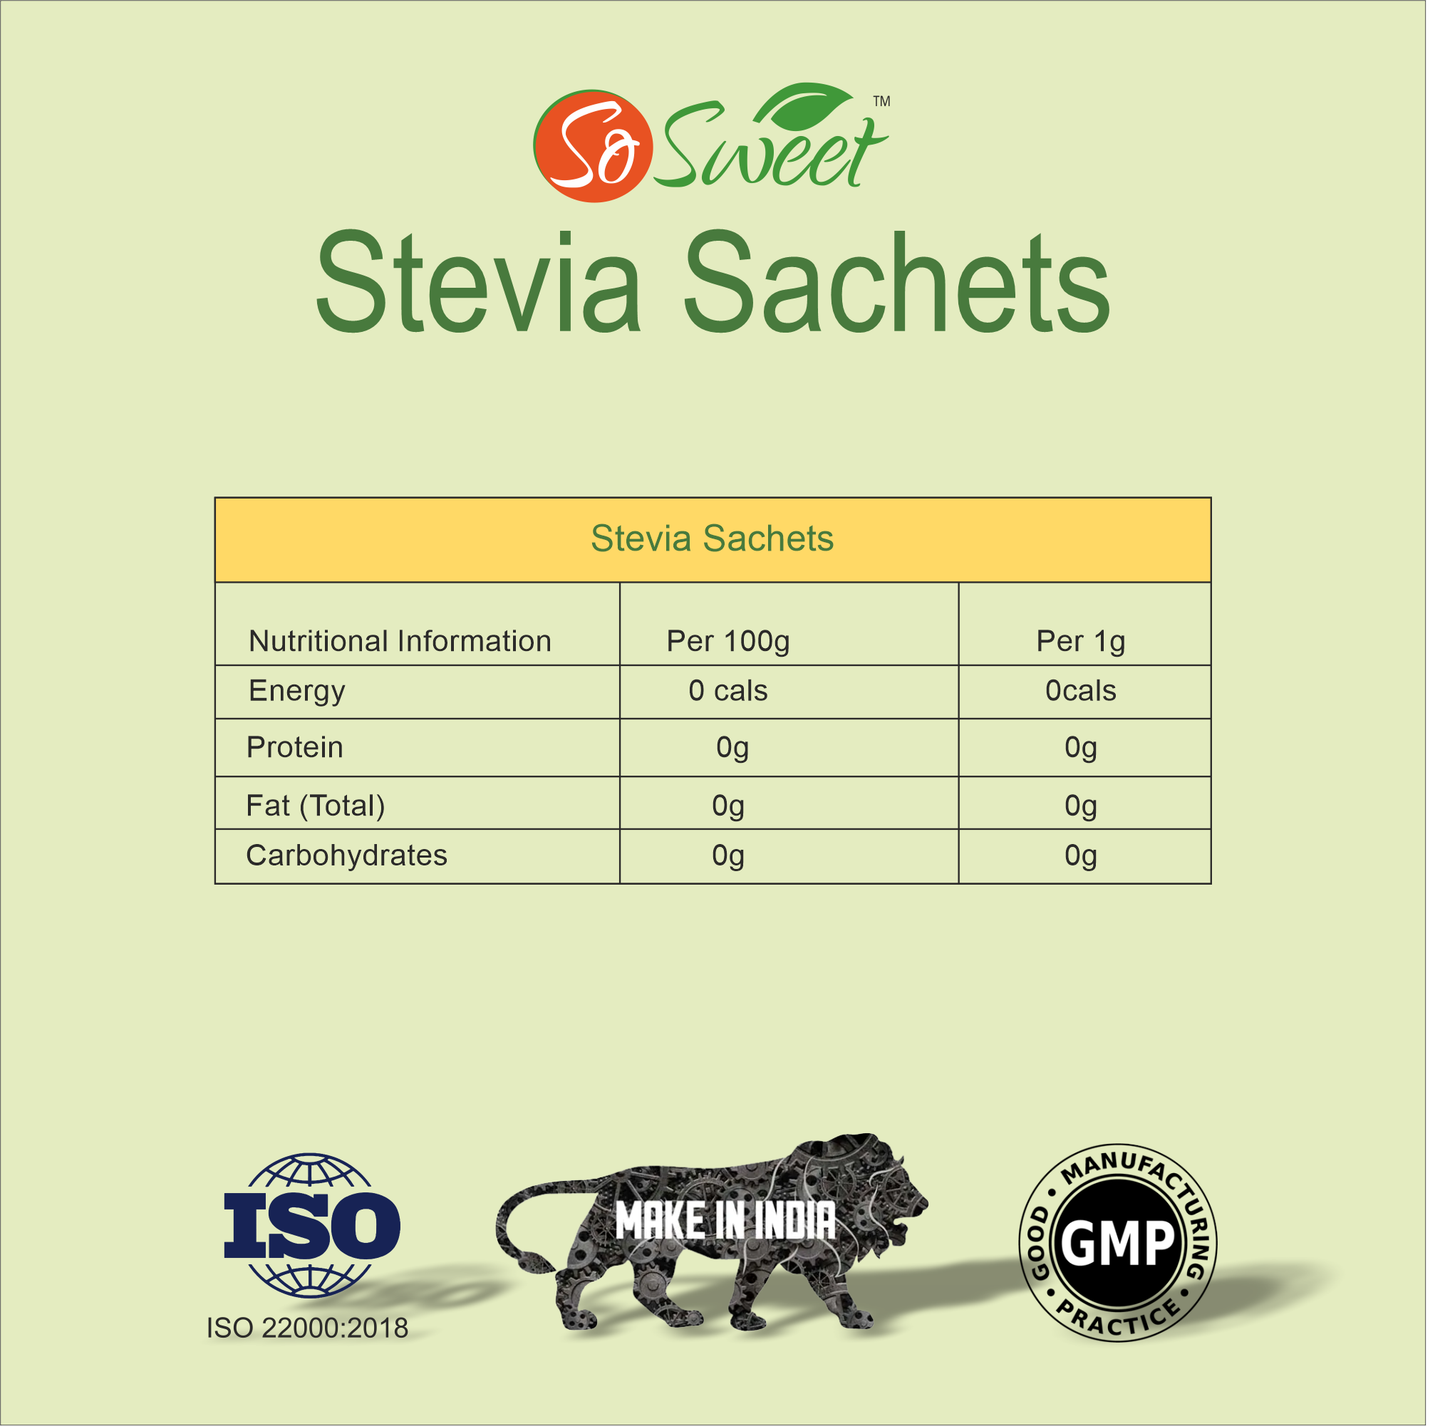 So Sweet Stevia 25 Sachets Sugar Free Natural Zero Calorie Sweetener